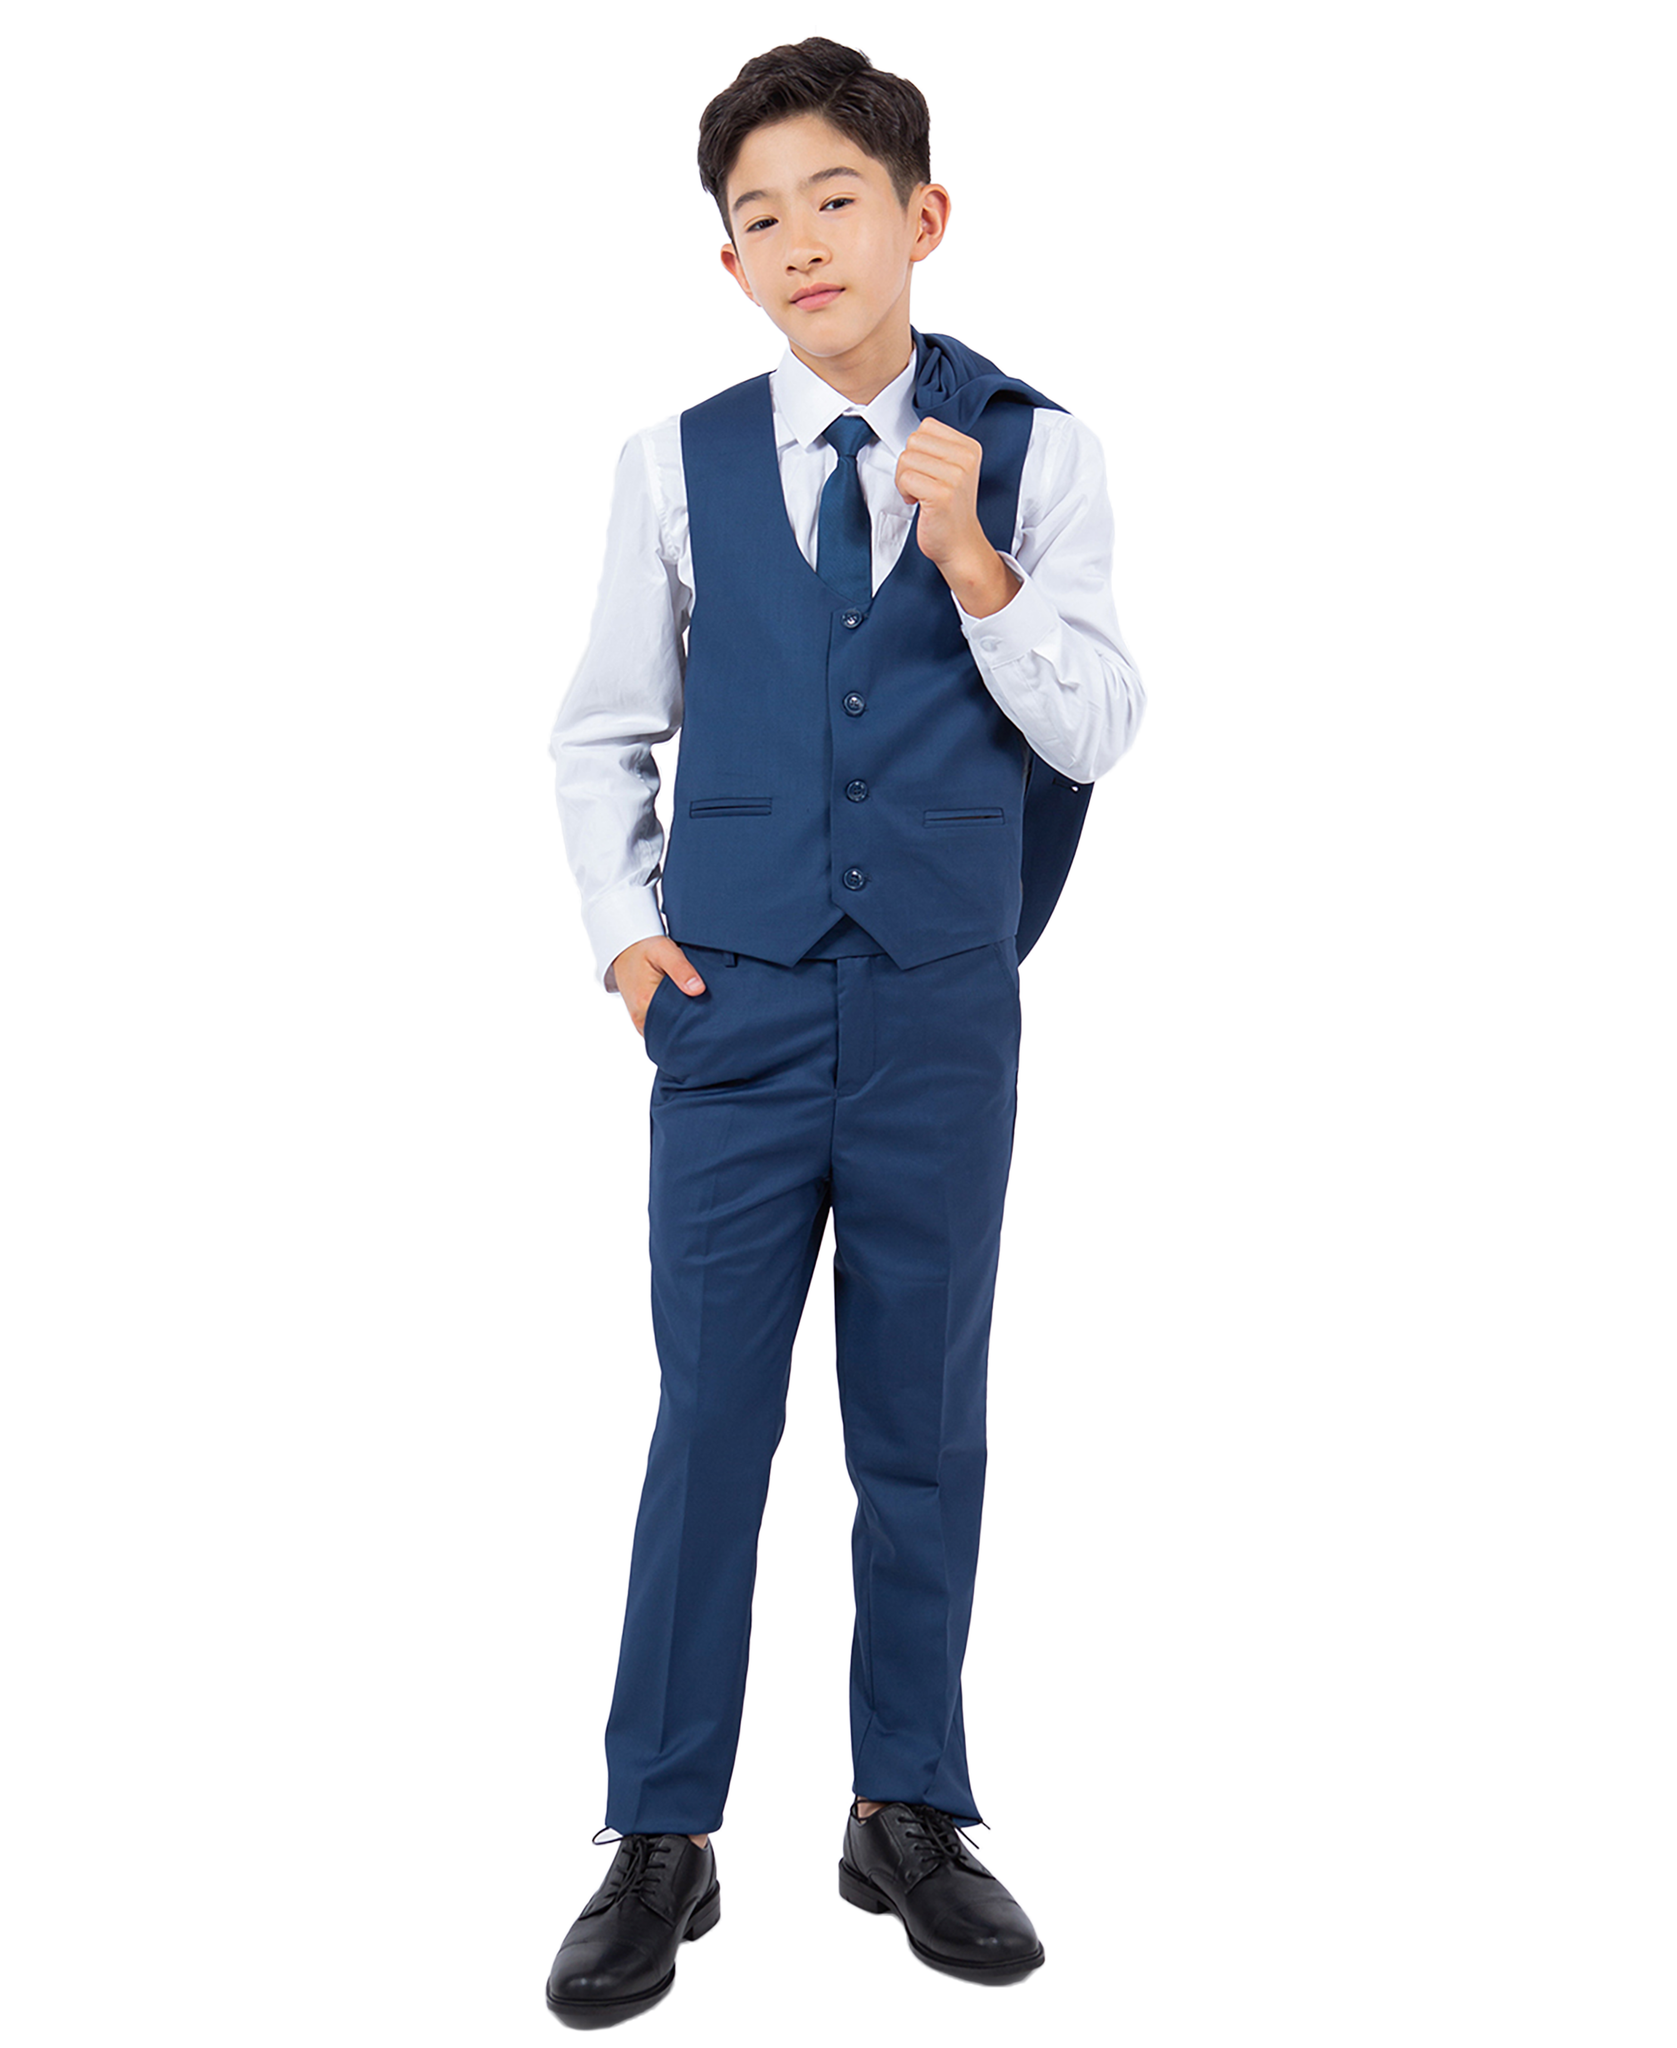 Perry Ellis Boys Suit Solid Indigo Blue